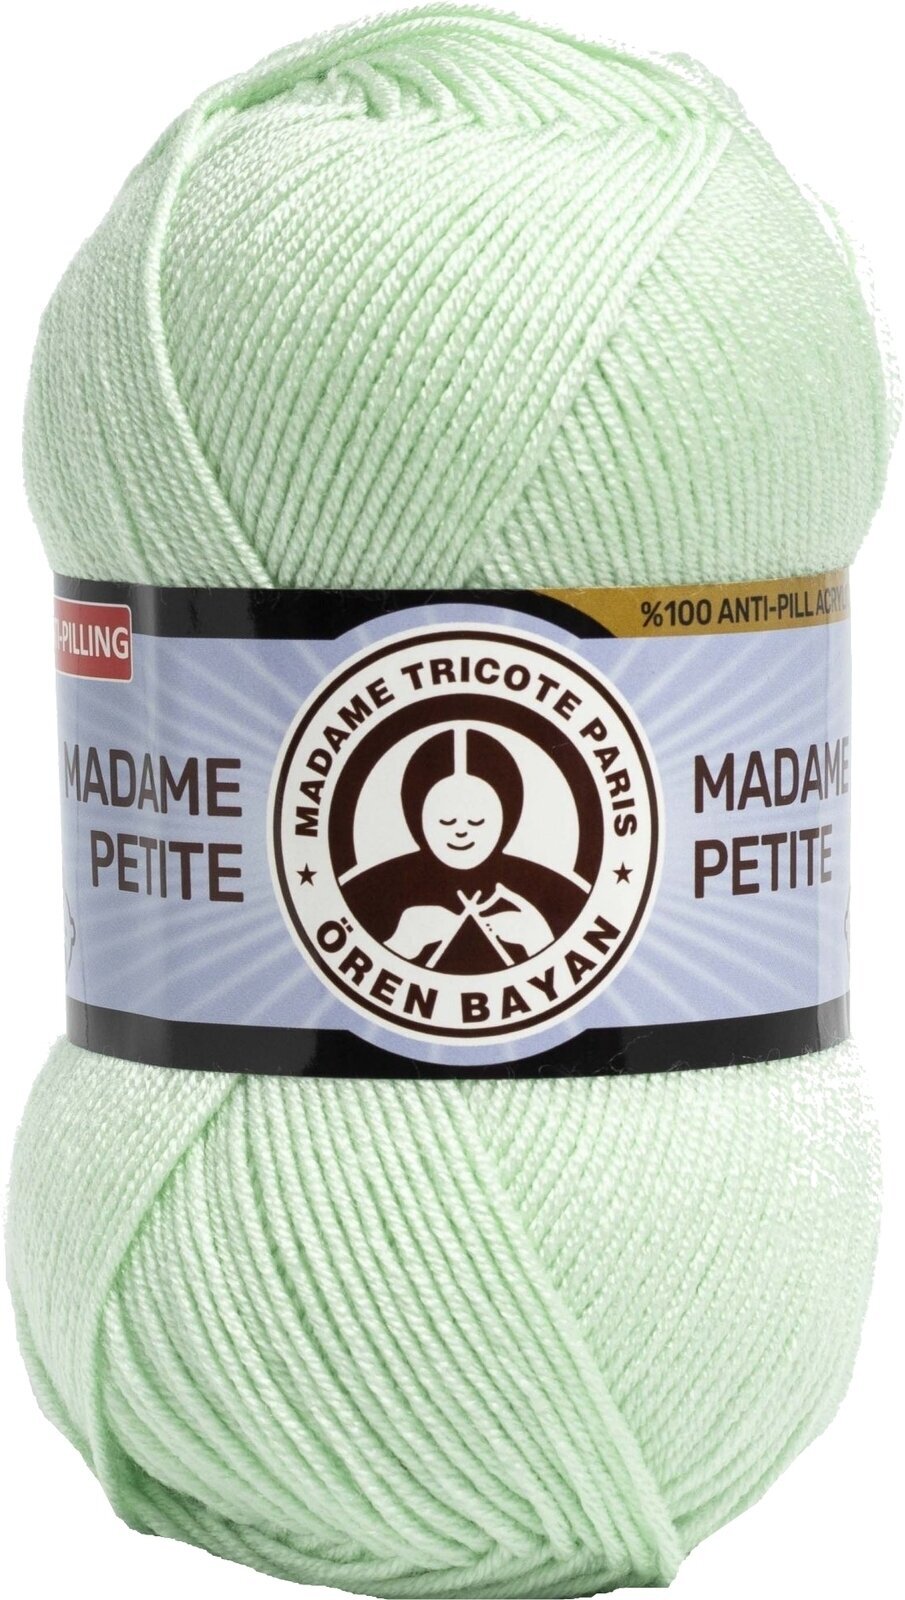 Knitting Yarn Madame Tricote Paris Madame Petite 3848 90 Knitting Yarn